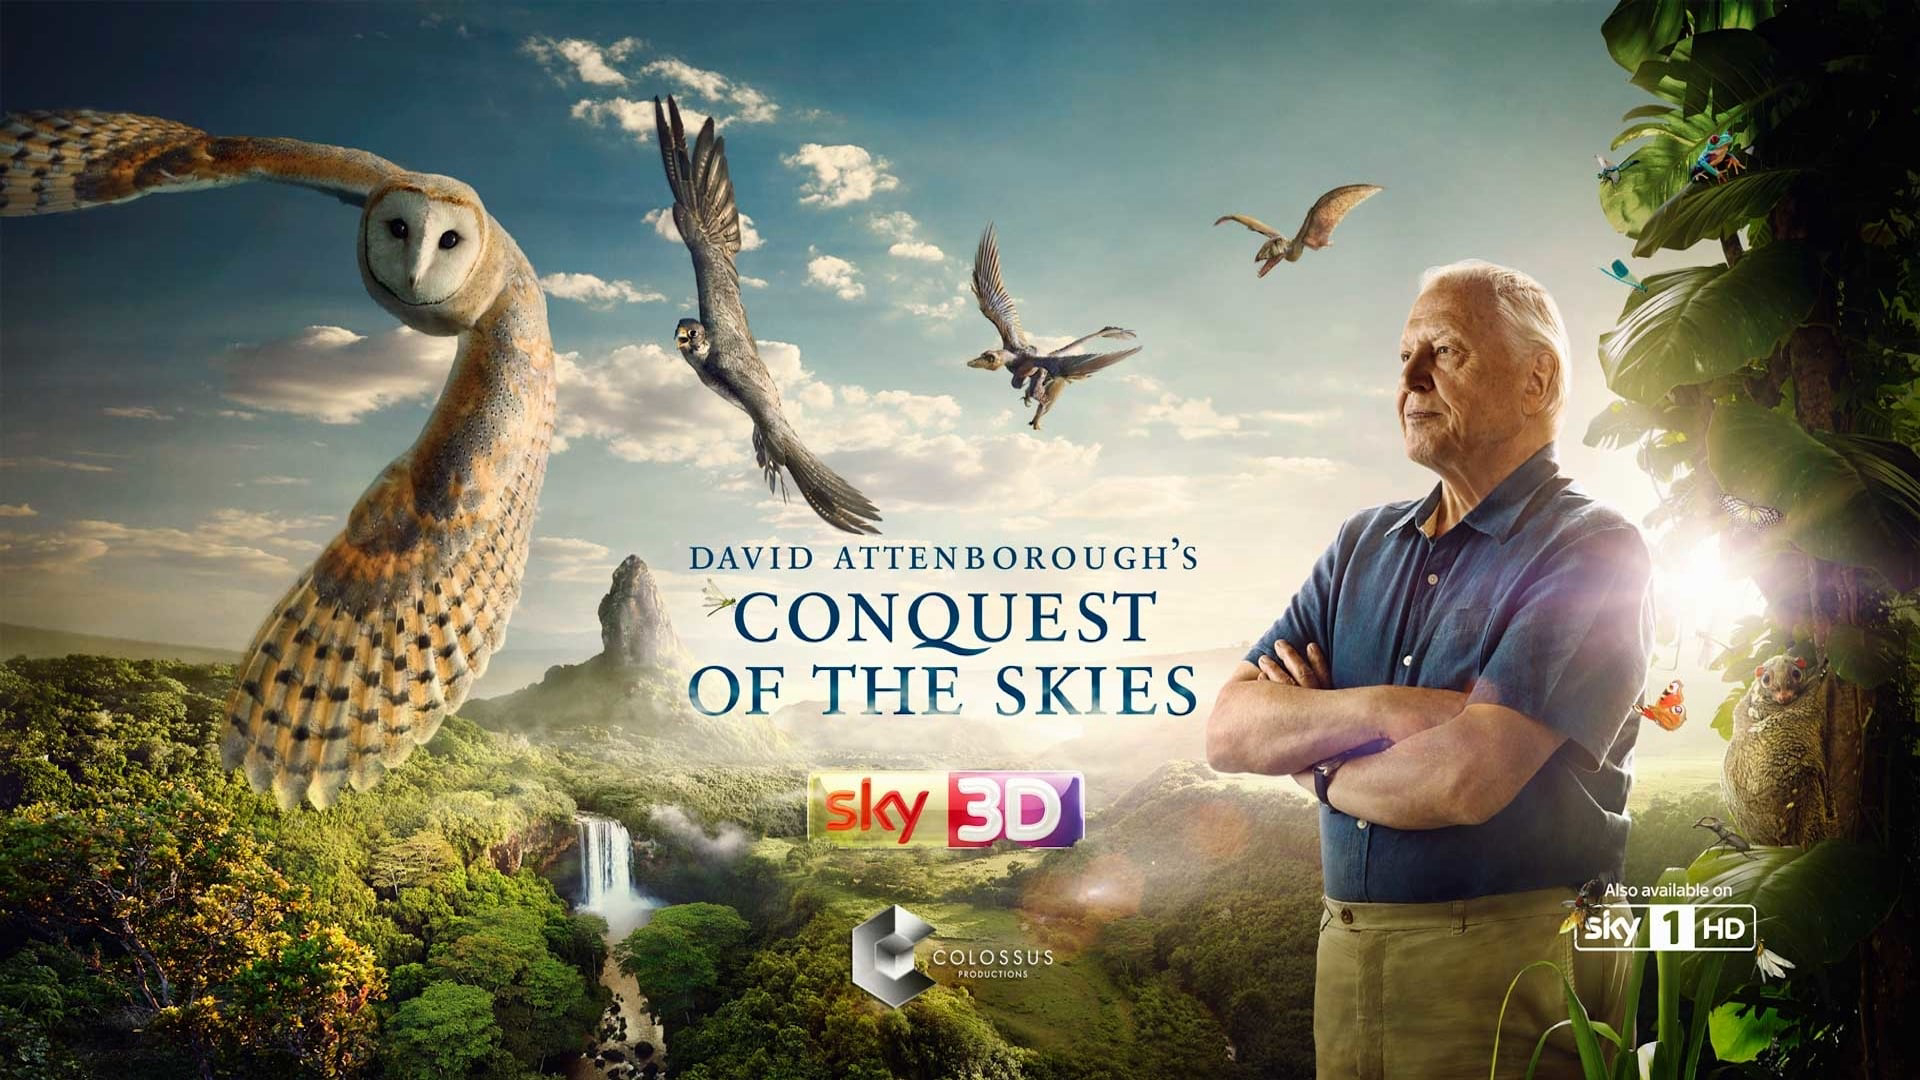 David Attenborough's Conquest of the Skies / David Attenborough's Conquest of the Skies (2015)